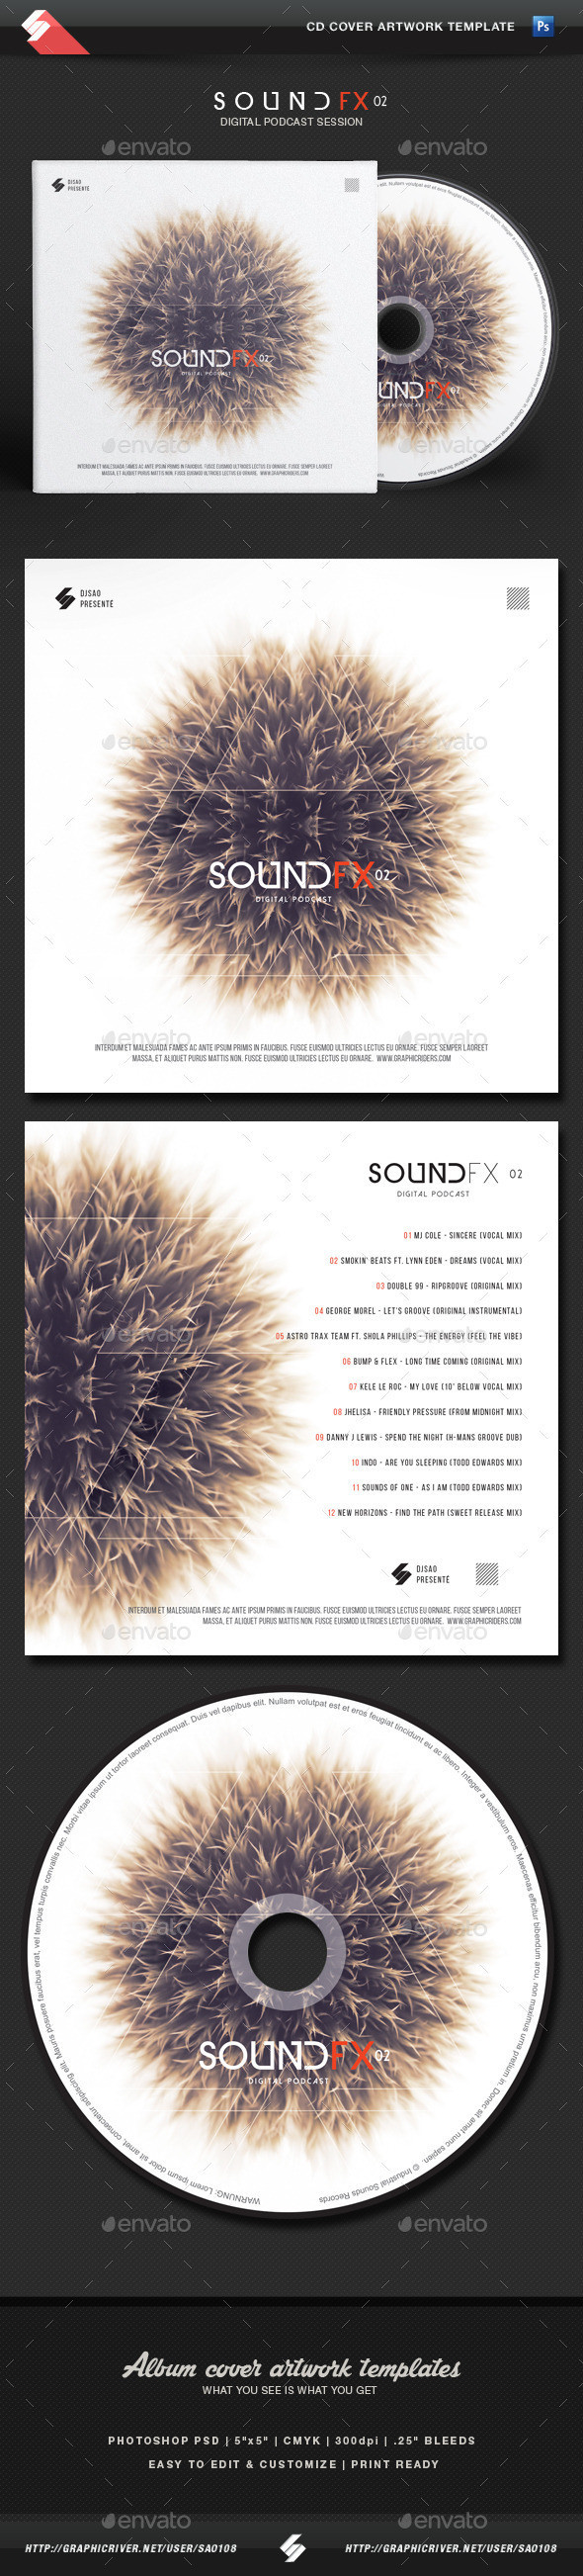 Soundfx2 cd cover template preview